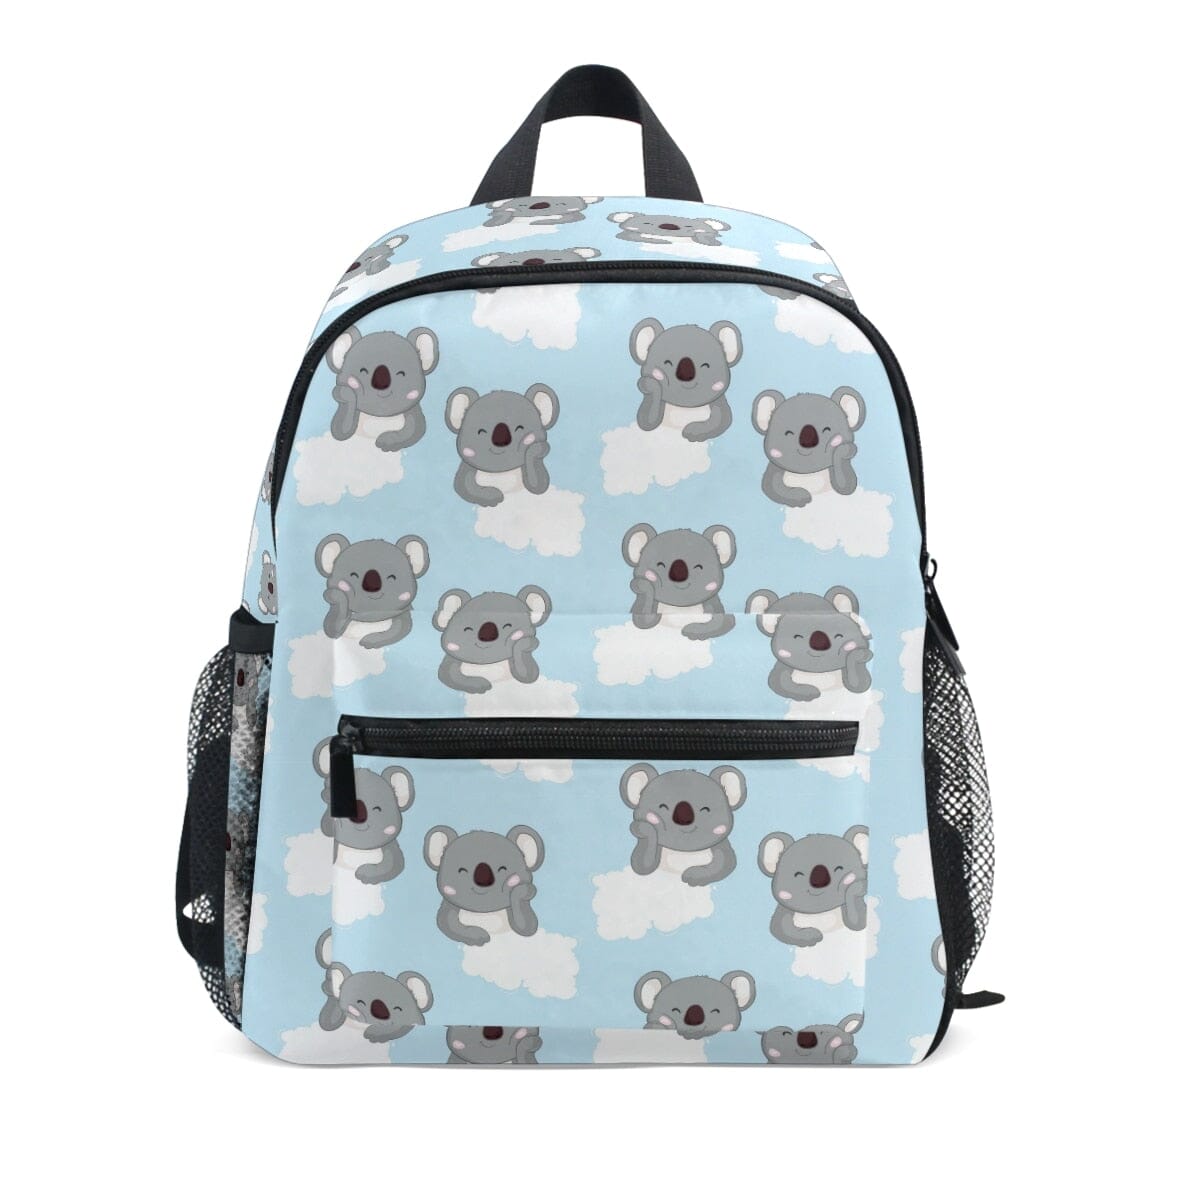 Koala Mini Backpack The Store Bags 02 